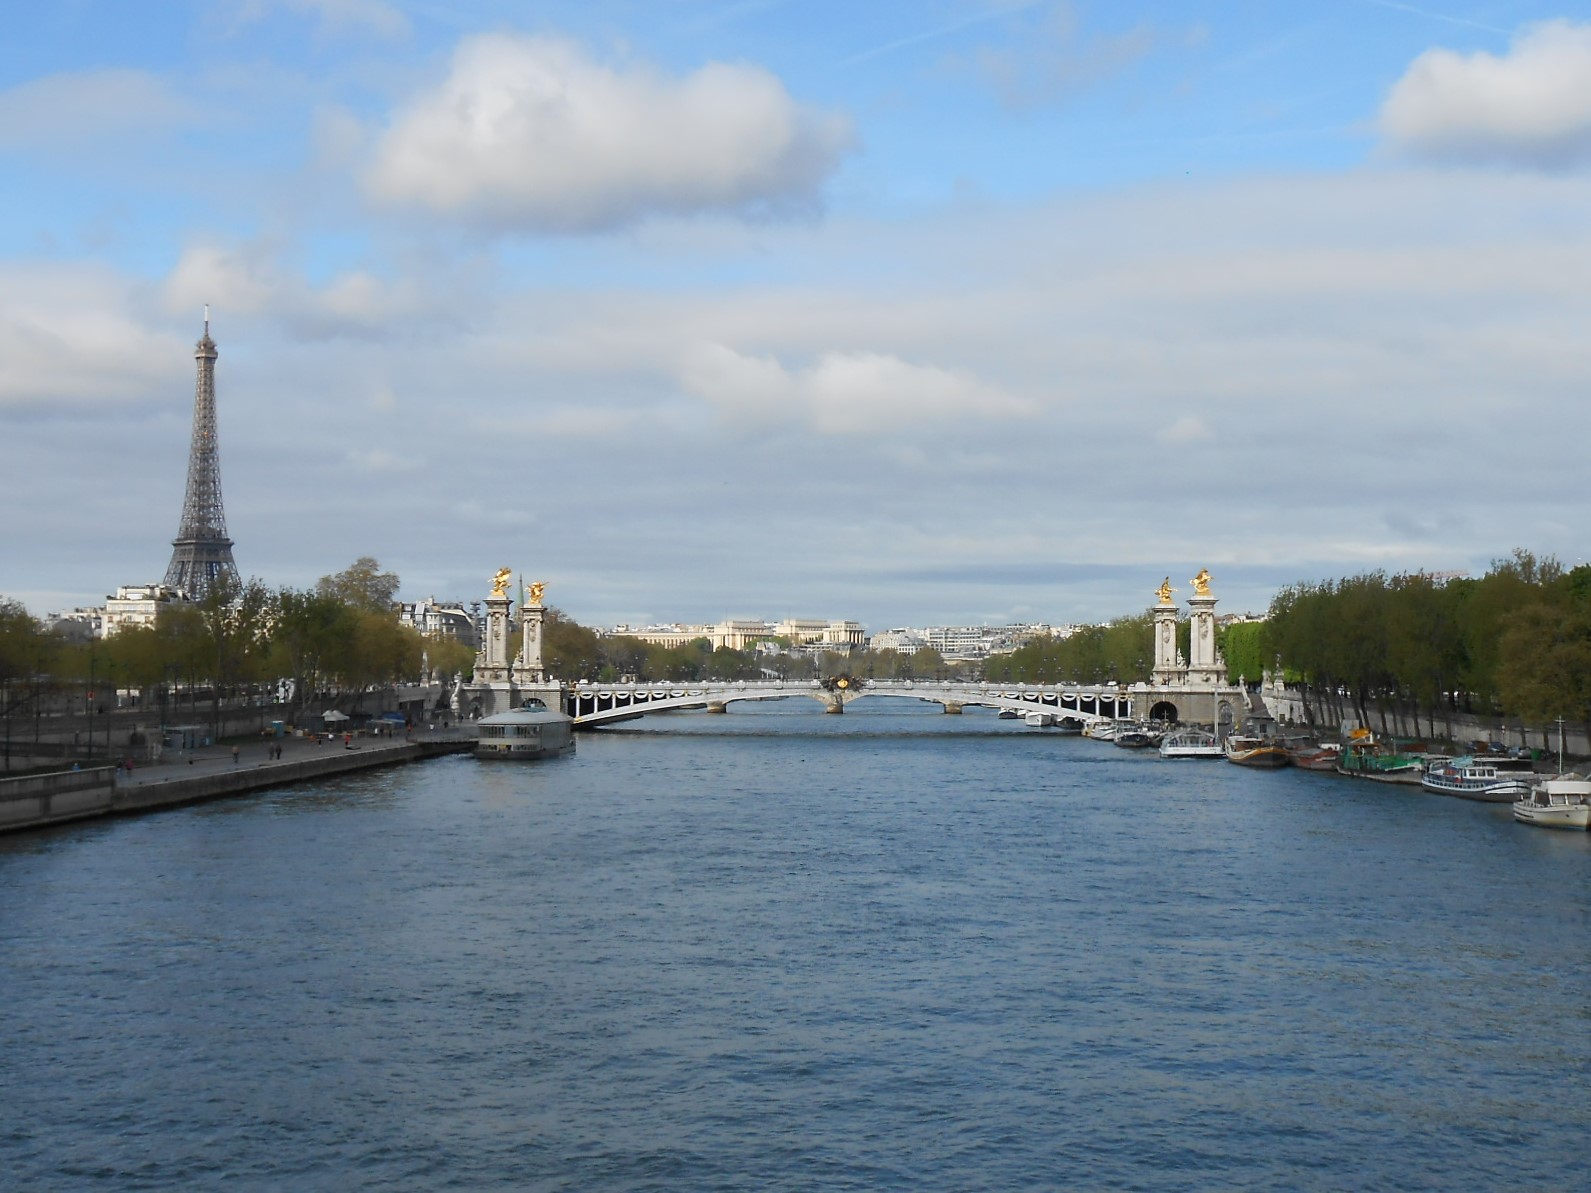  Eiffel Tower and the Alexander III bridge